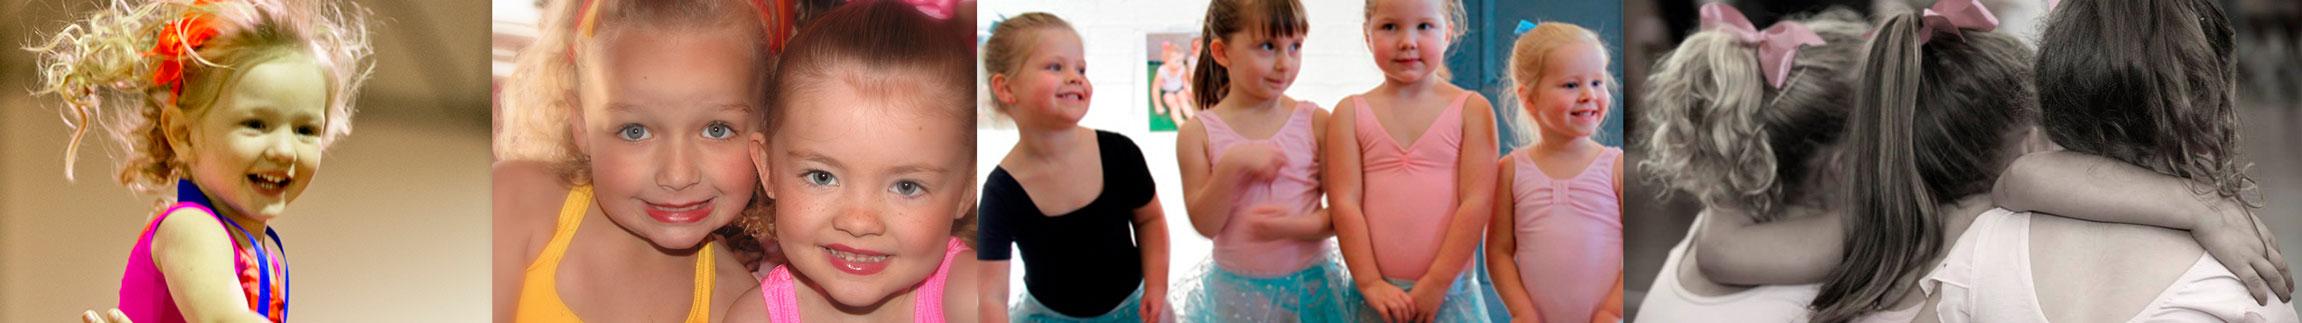 physie classes at Waratah Physical culture club - preschool dance classes - teens and ladies dance classes